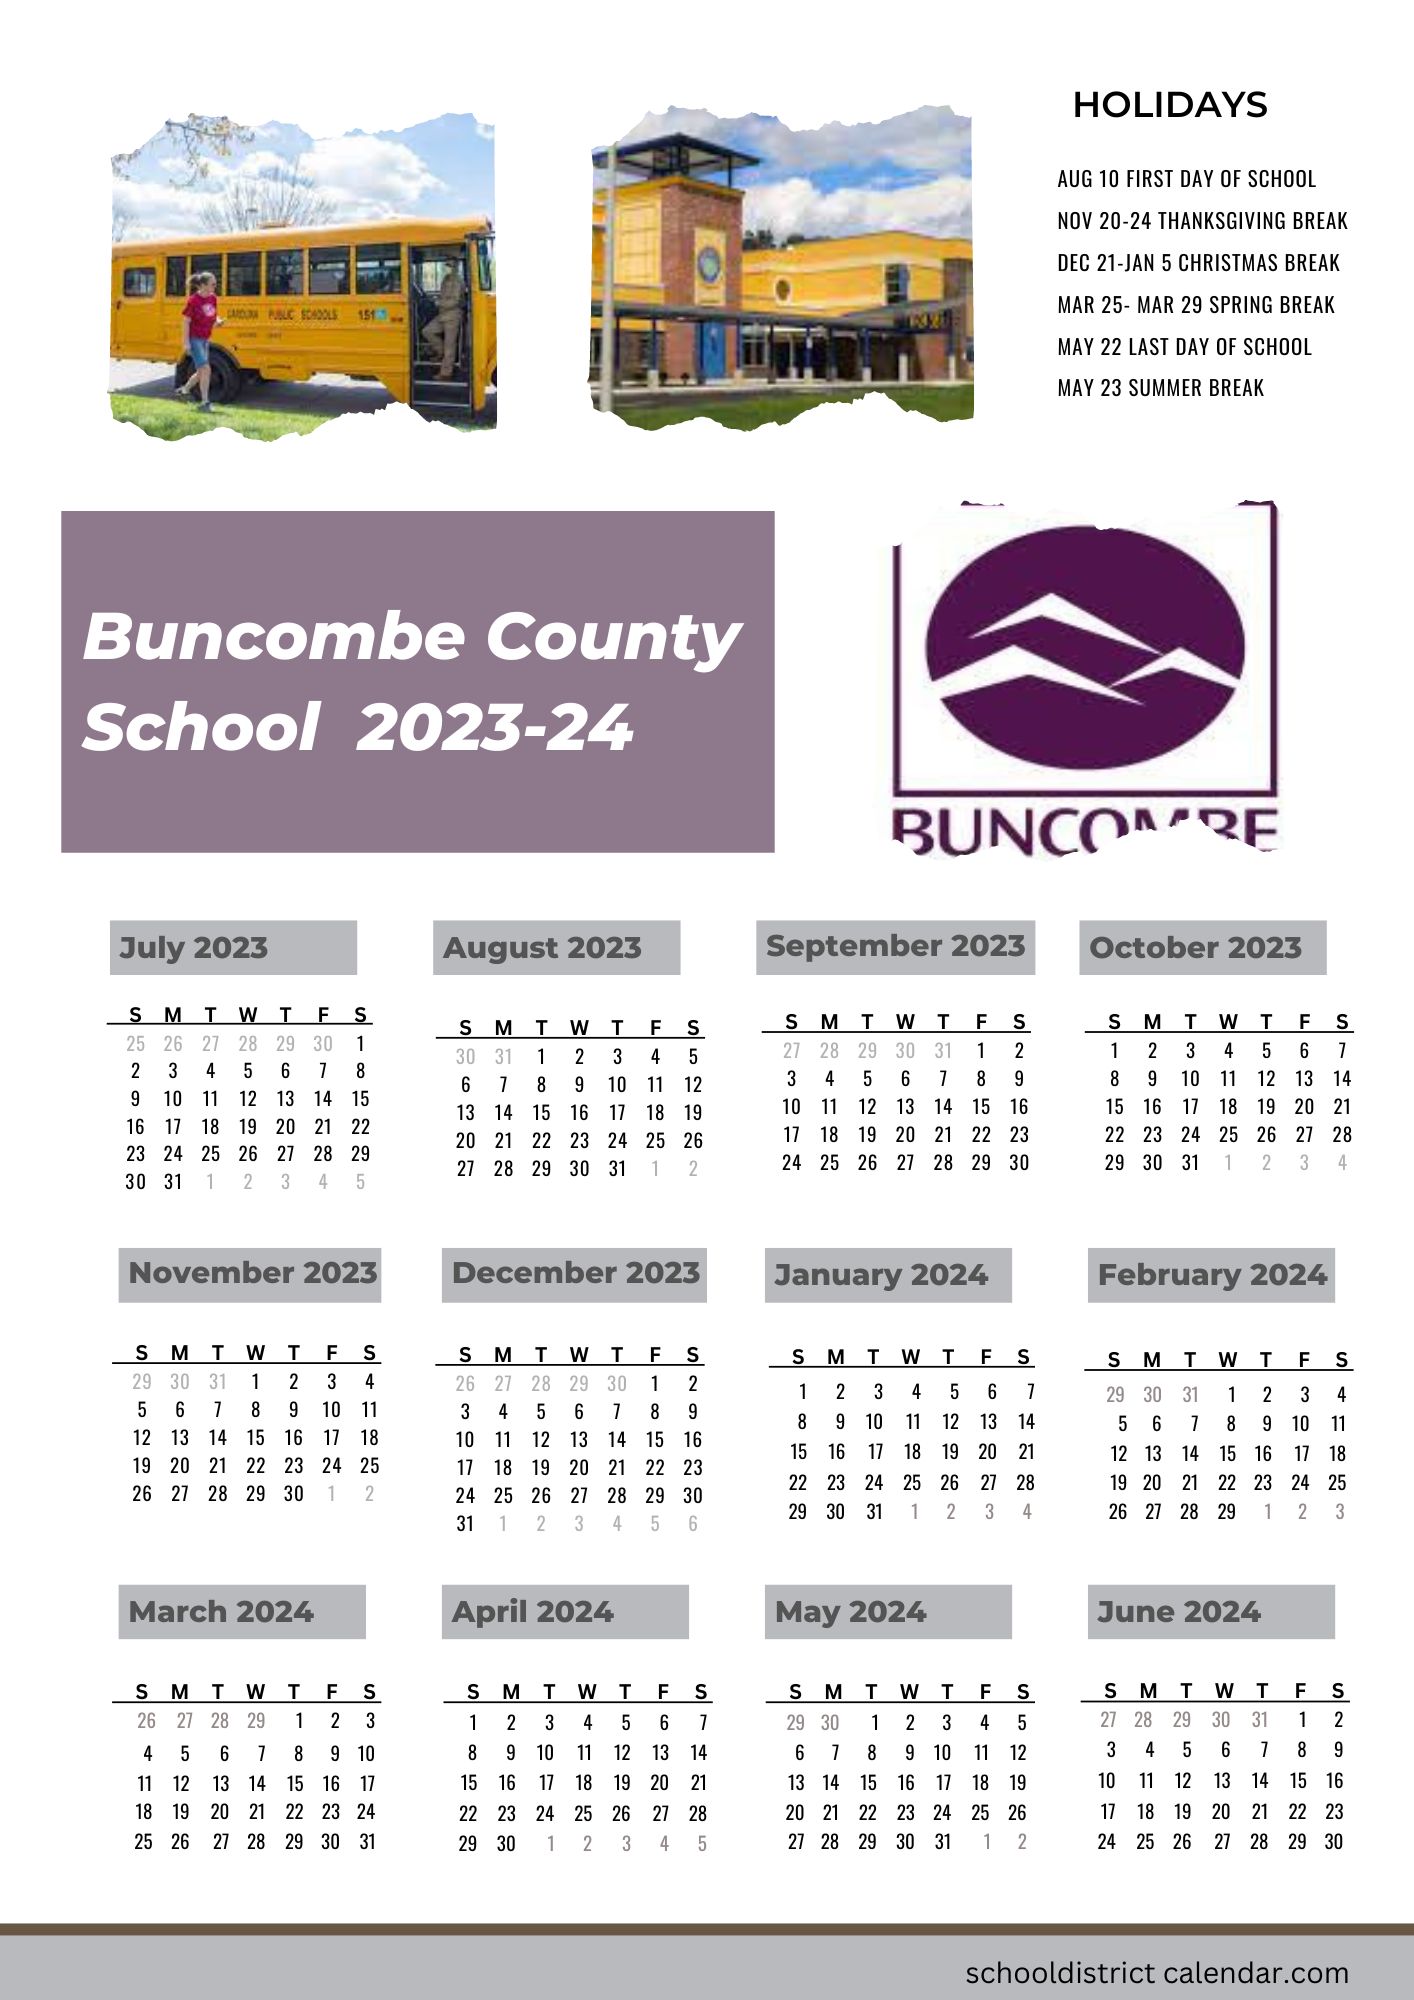 buncombe-county-schools-calendar-holidays-2023-2024